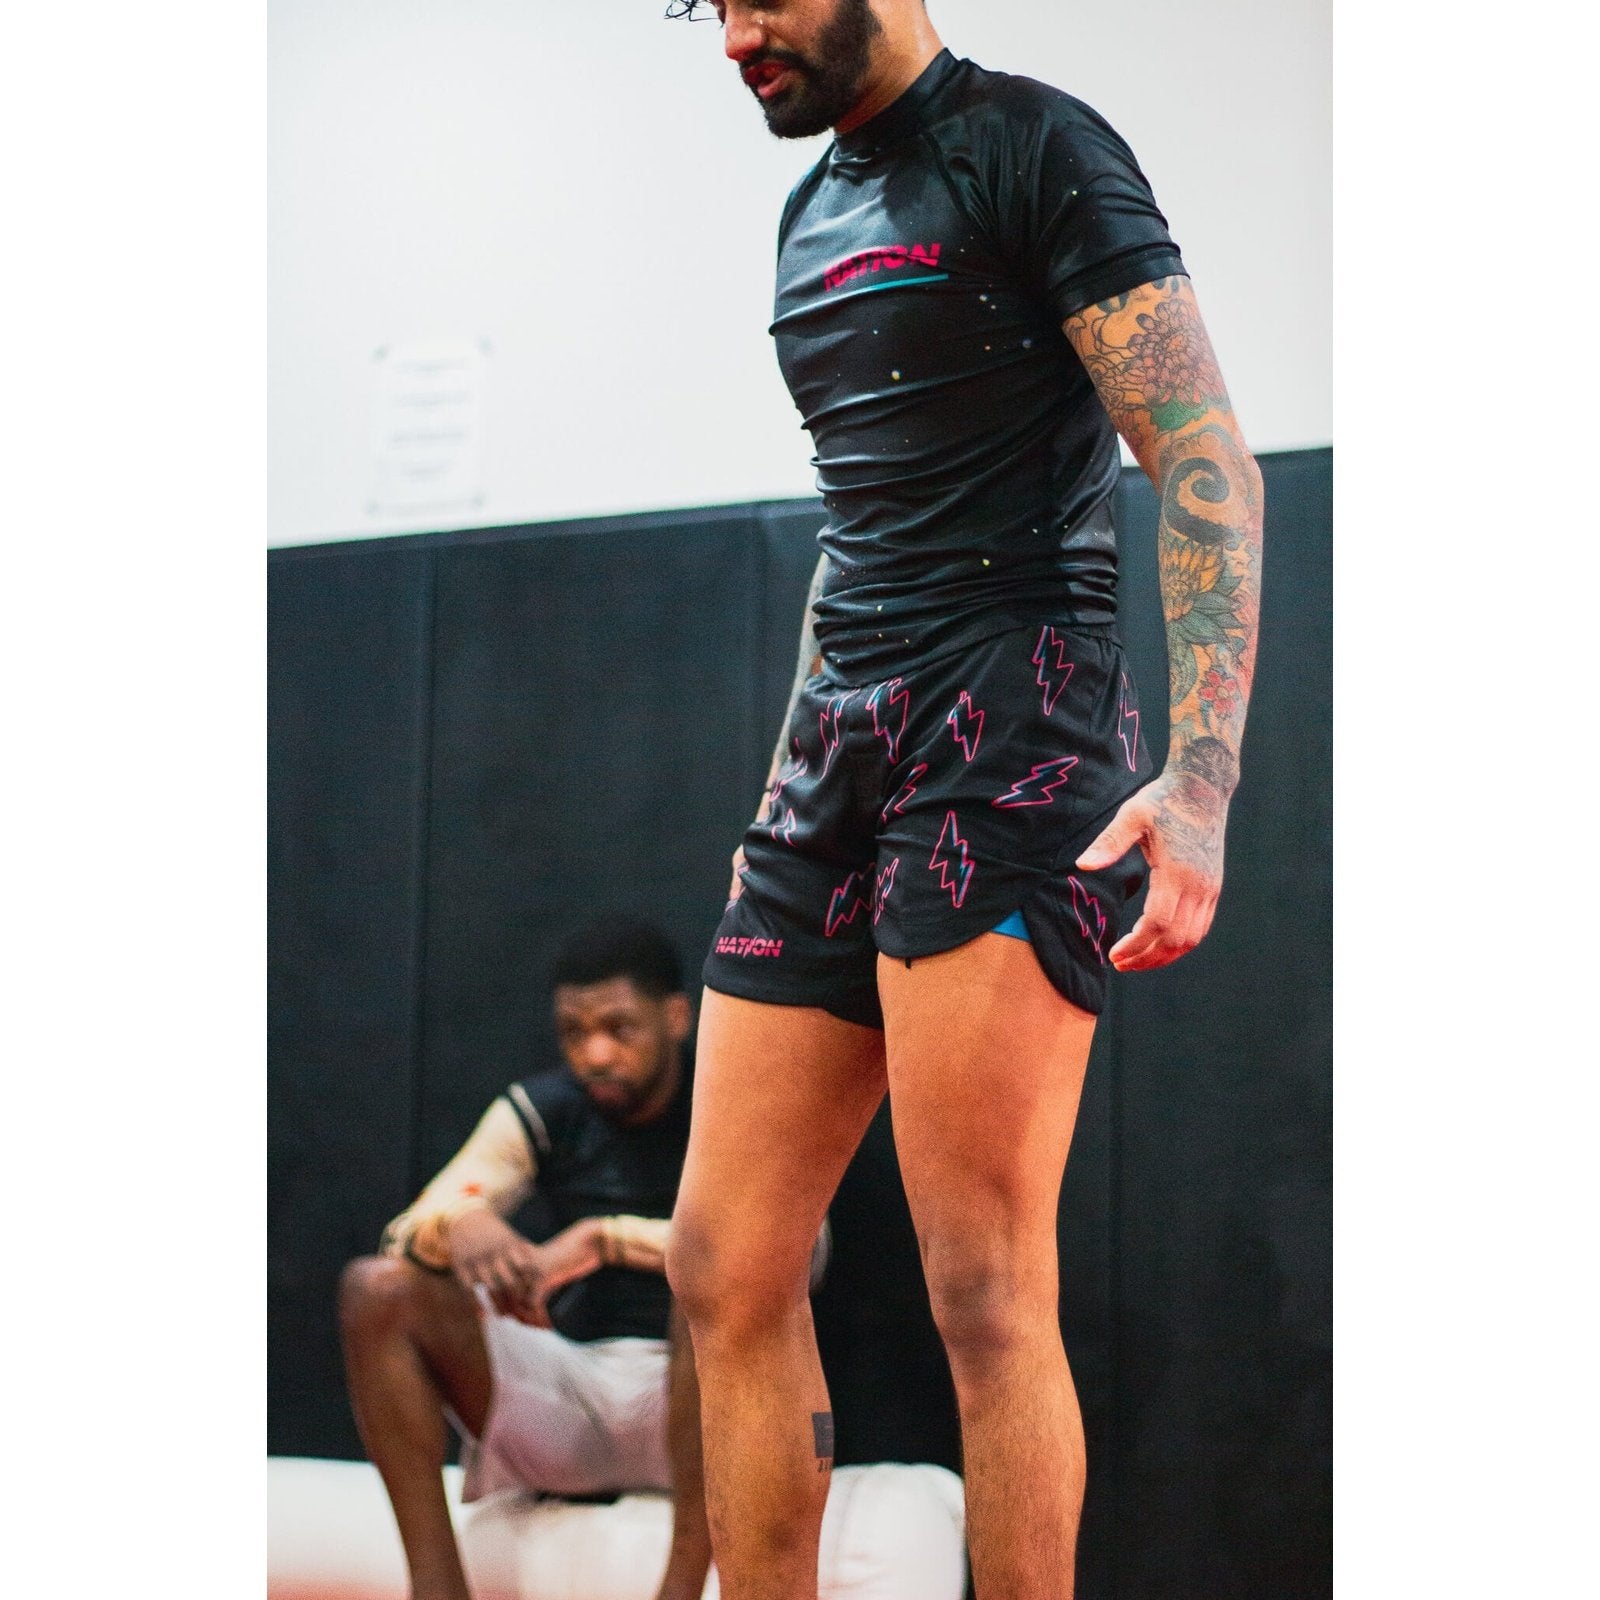 bjj grappling shorts black nation athletic jiu jitsu